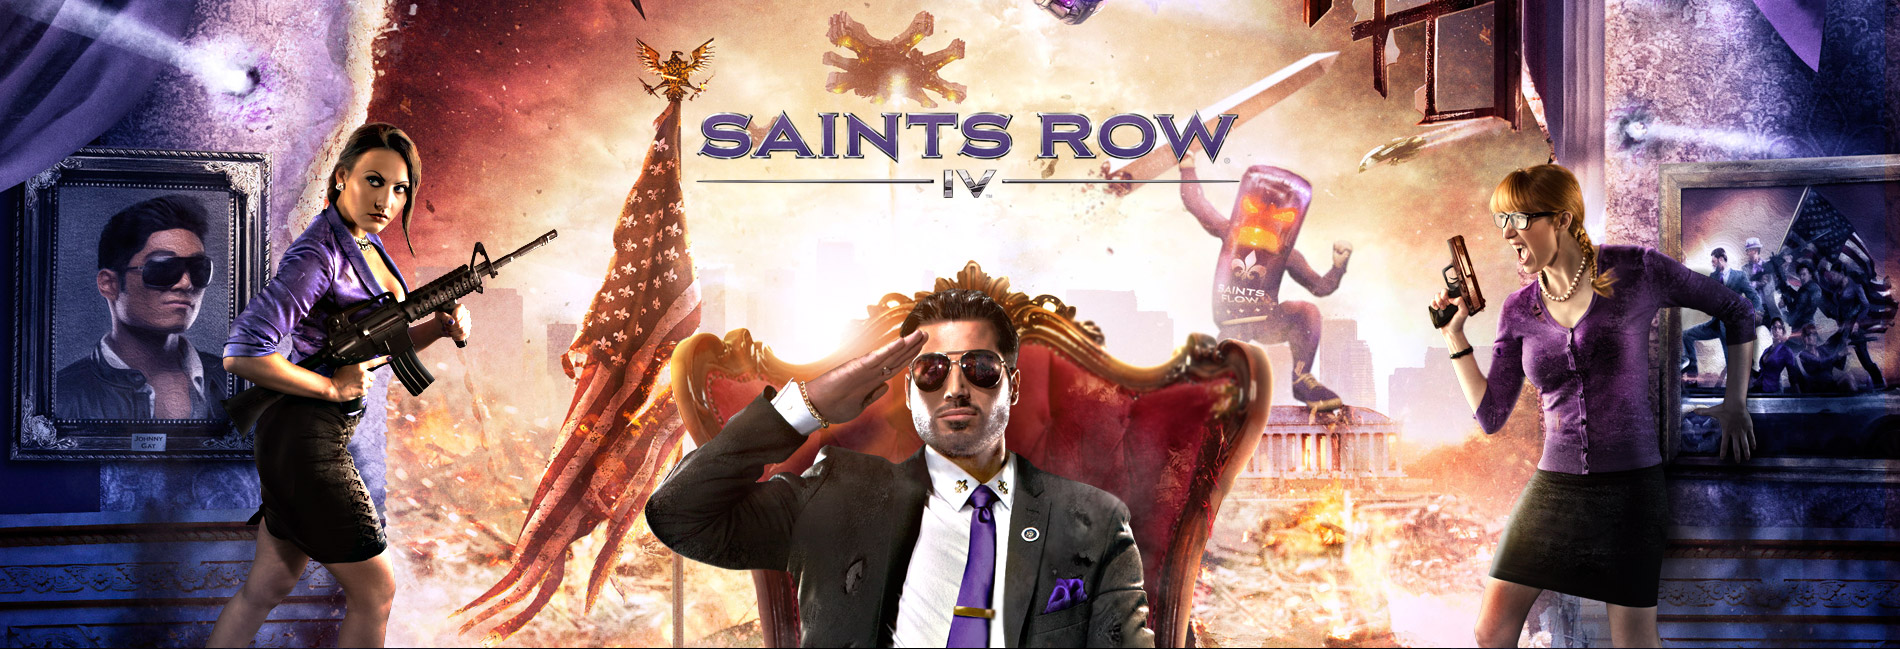 saints-row-iv